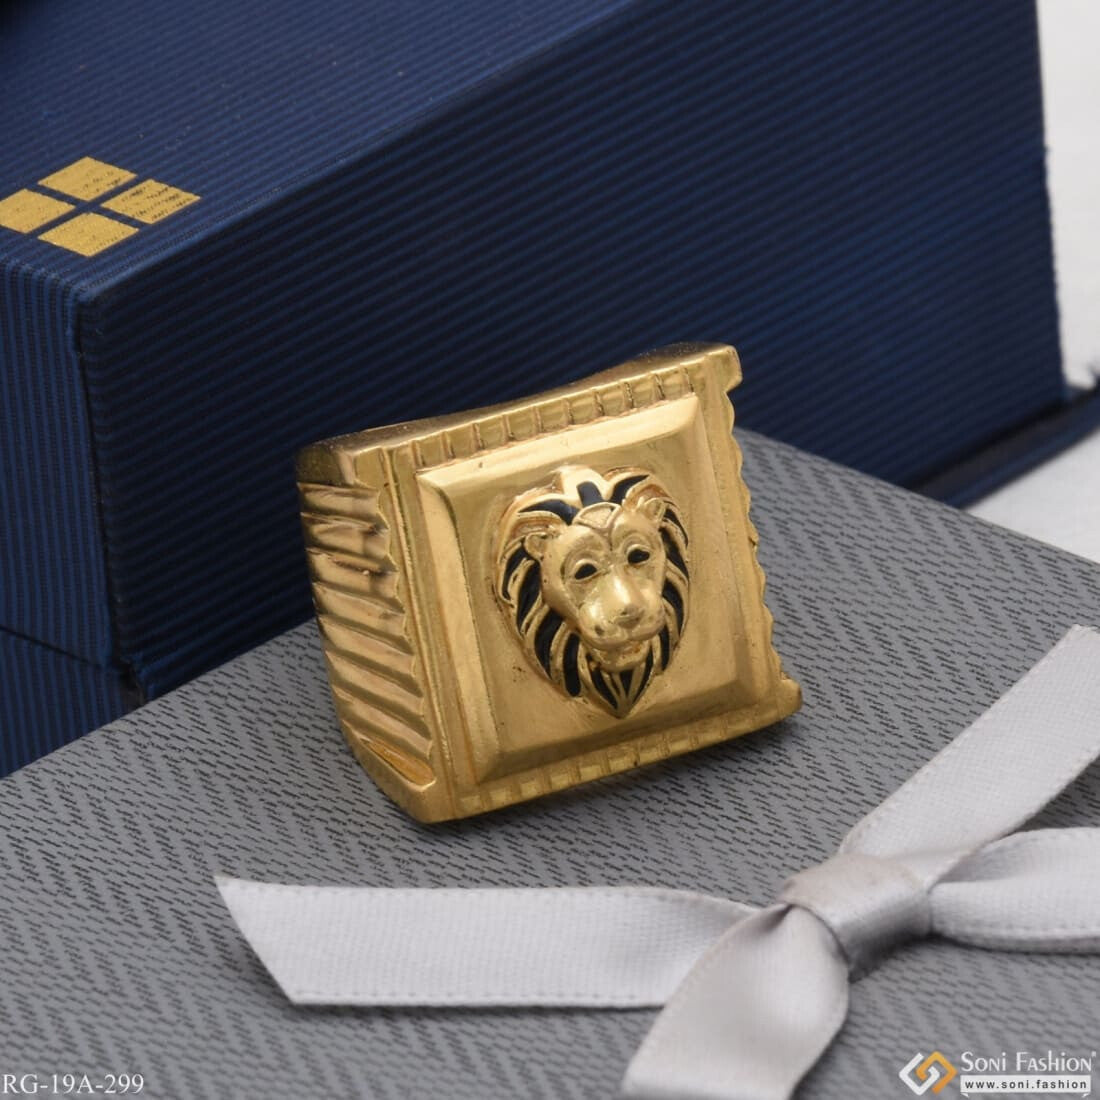 1 GRAM GOLD LION RING FOR MEN DESIGN A-622 – Radhe Imitation